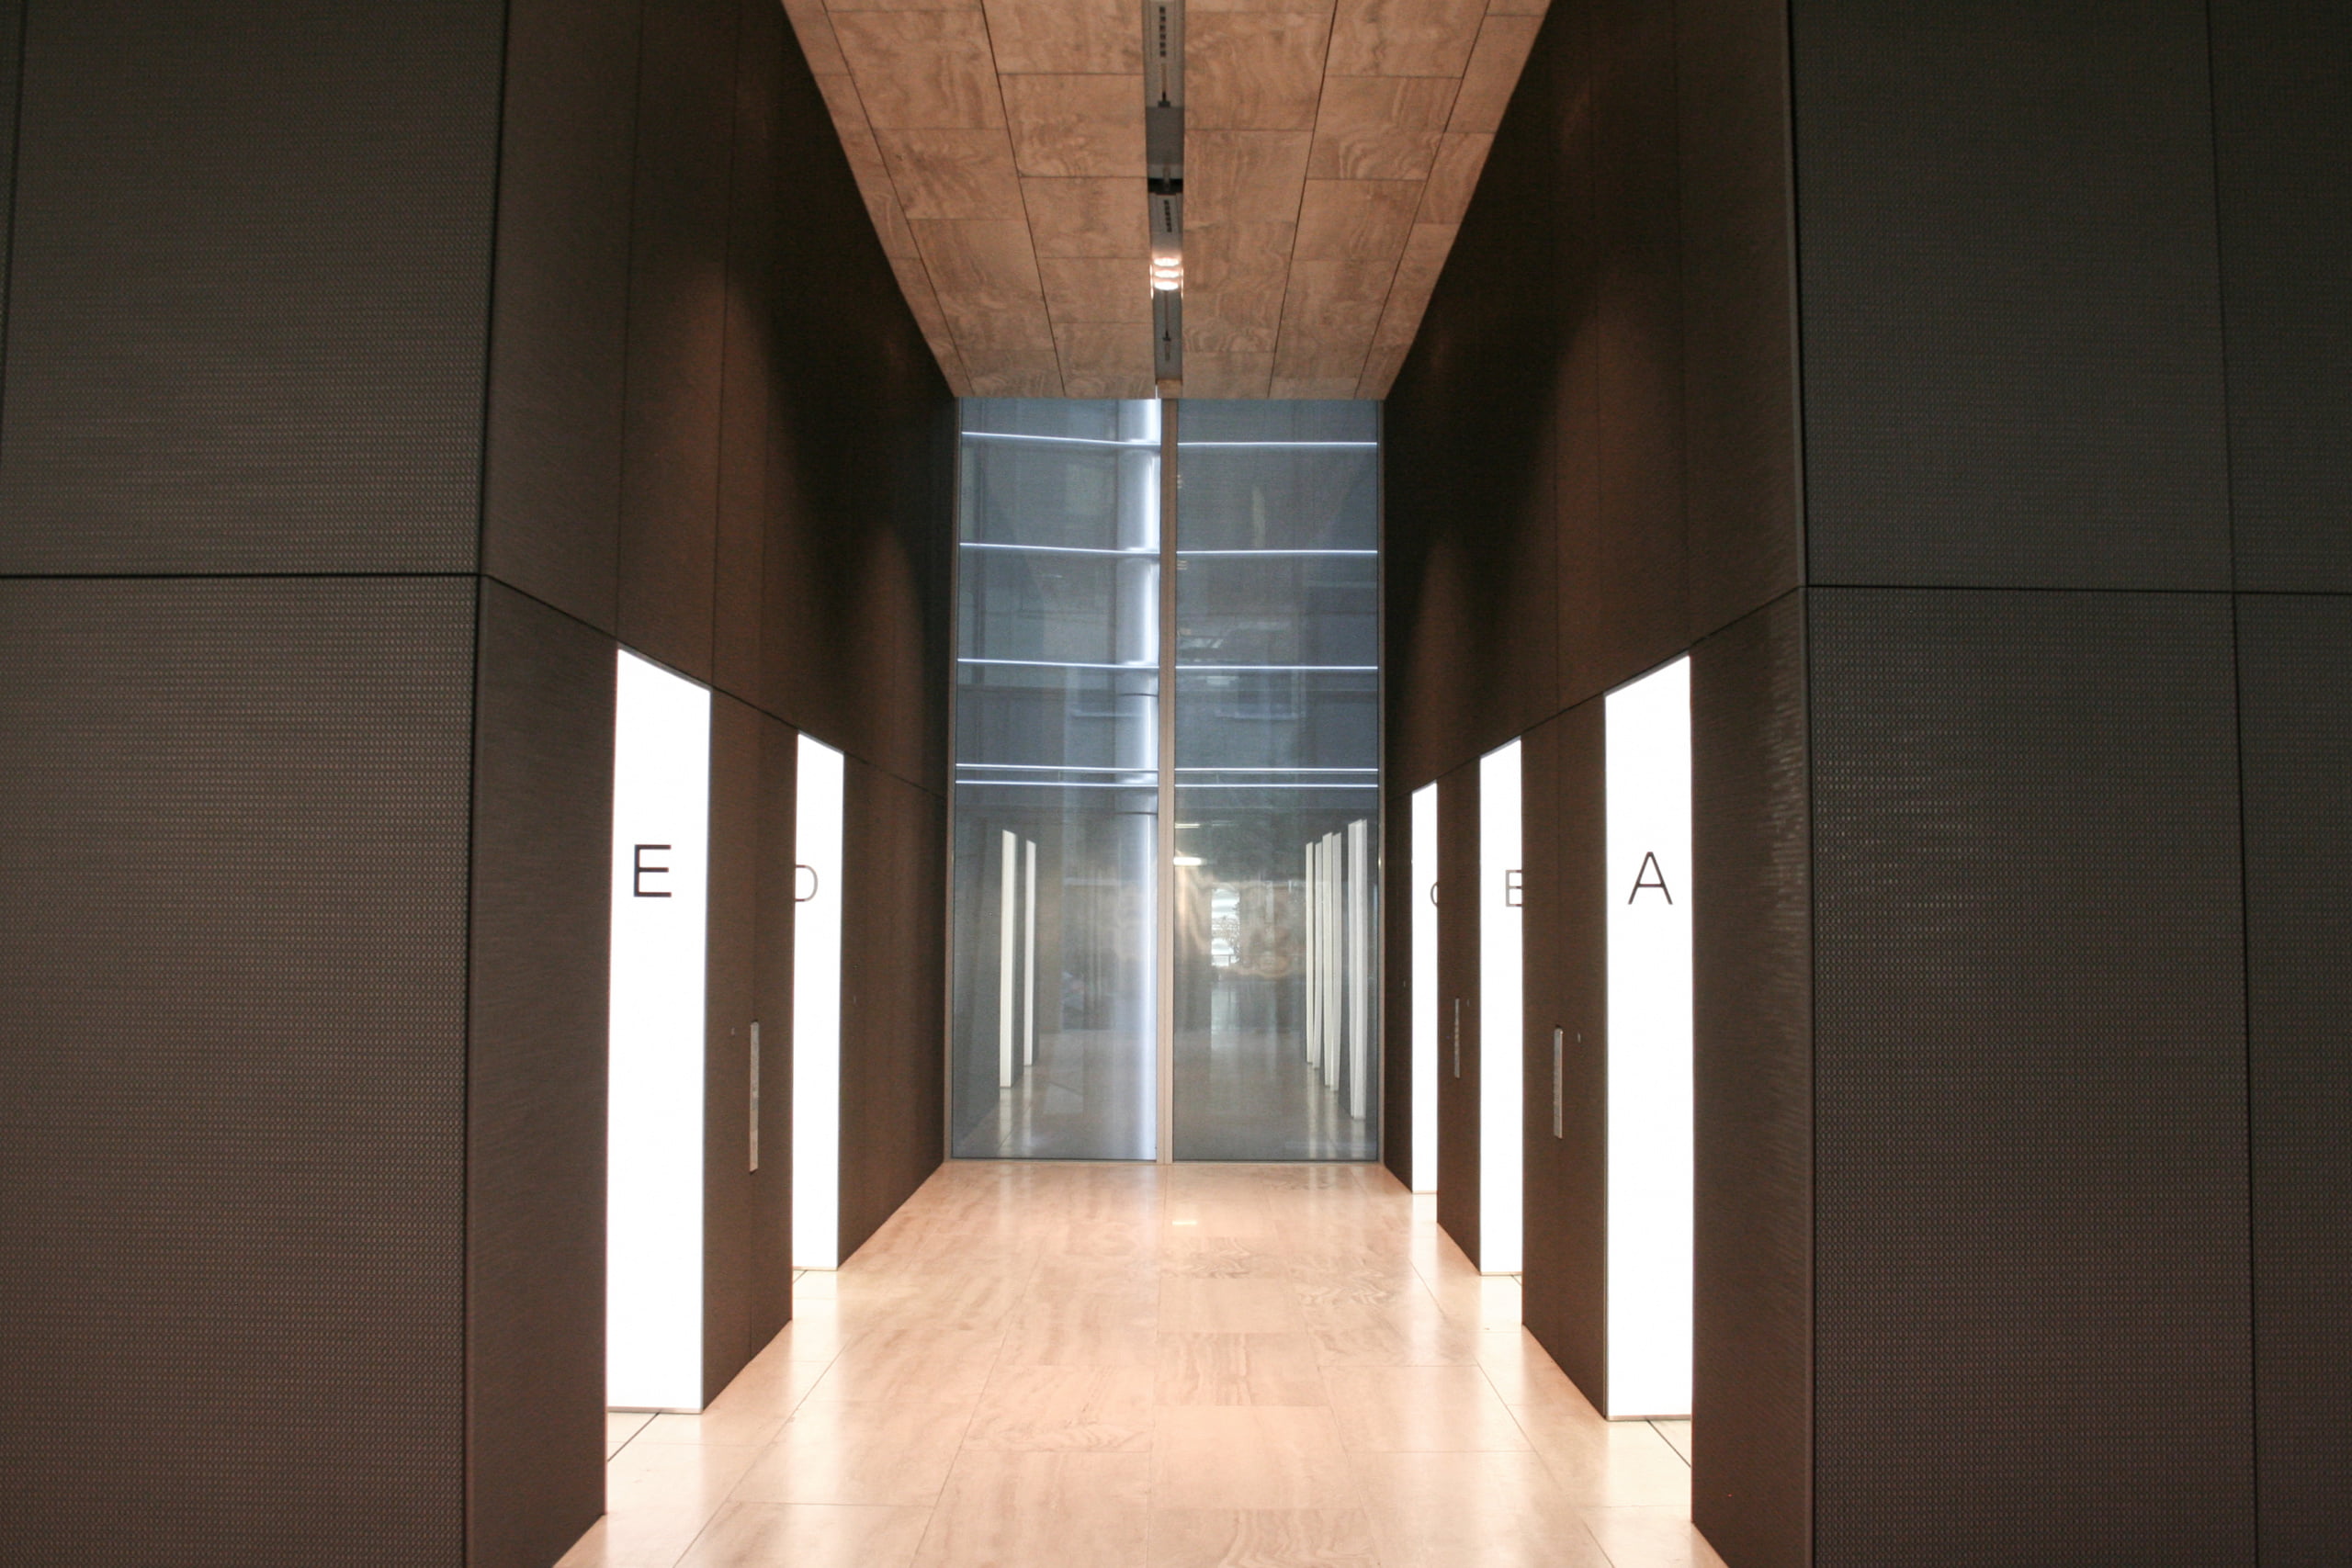 Rothschild Bank Project London Hallway Image